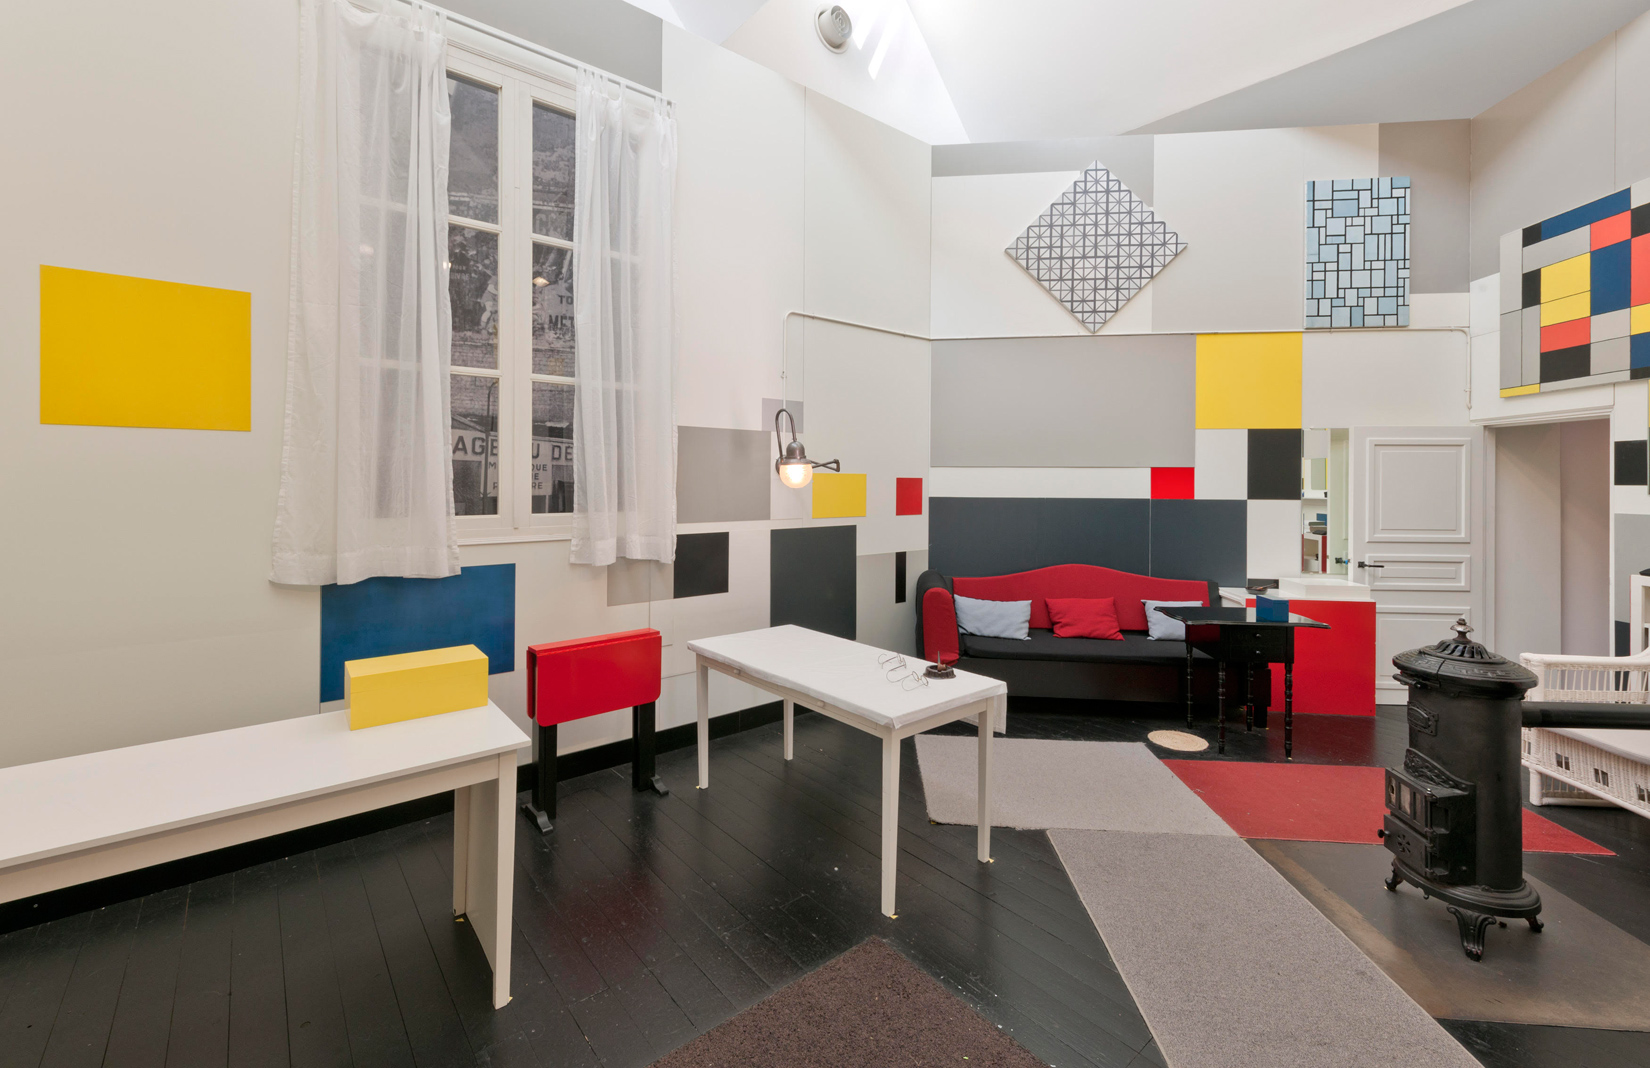 Piet Mondrian's studio recreated at Tate Liverpool